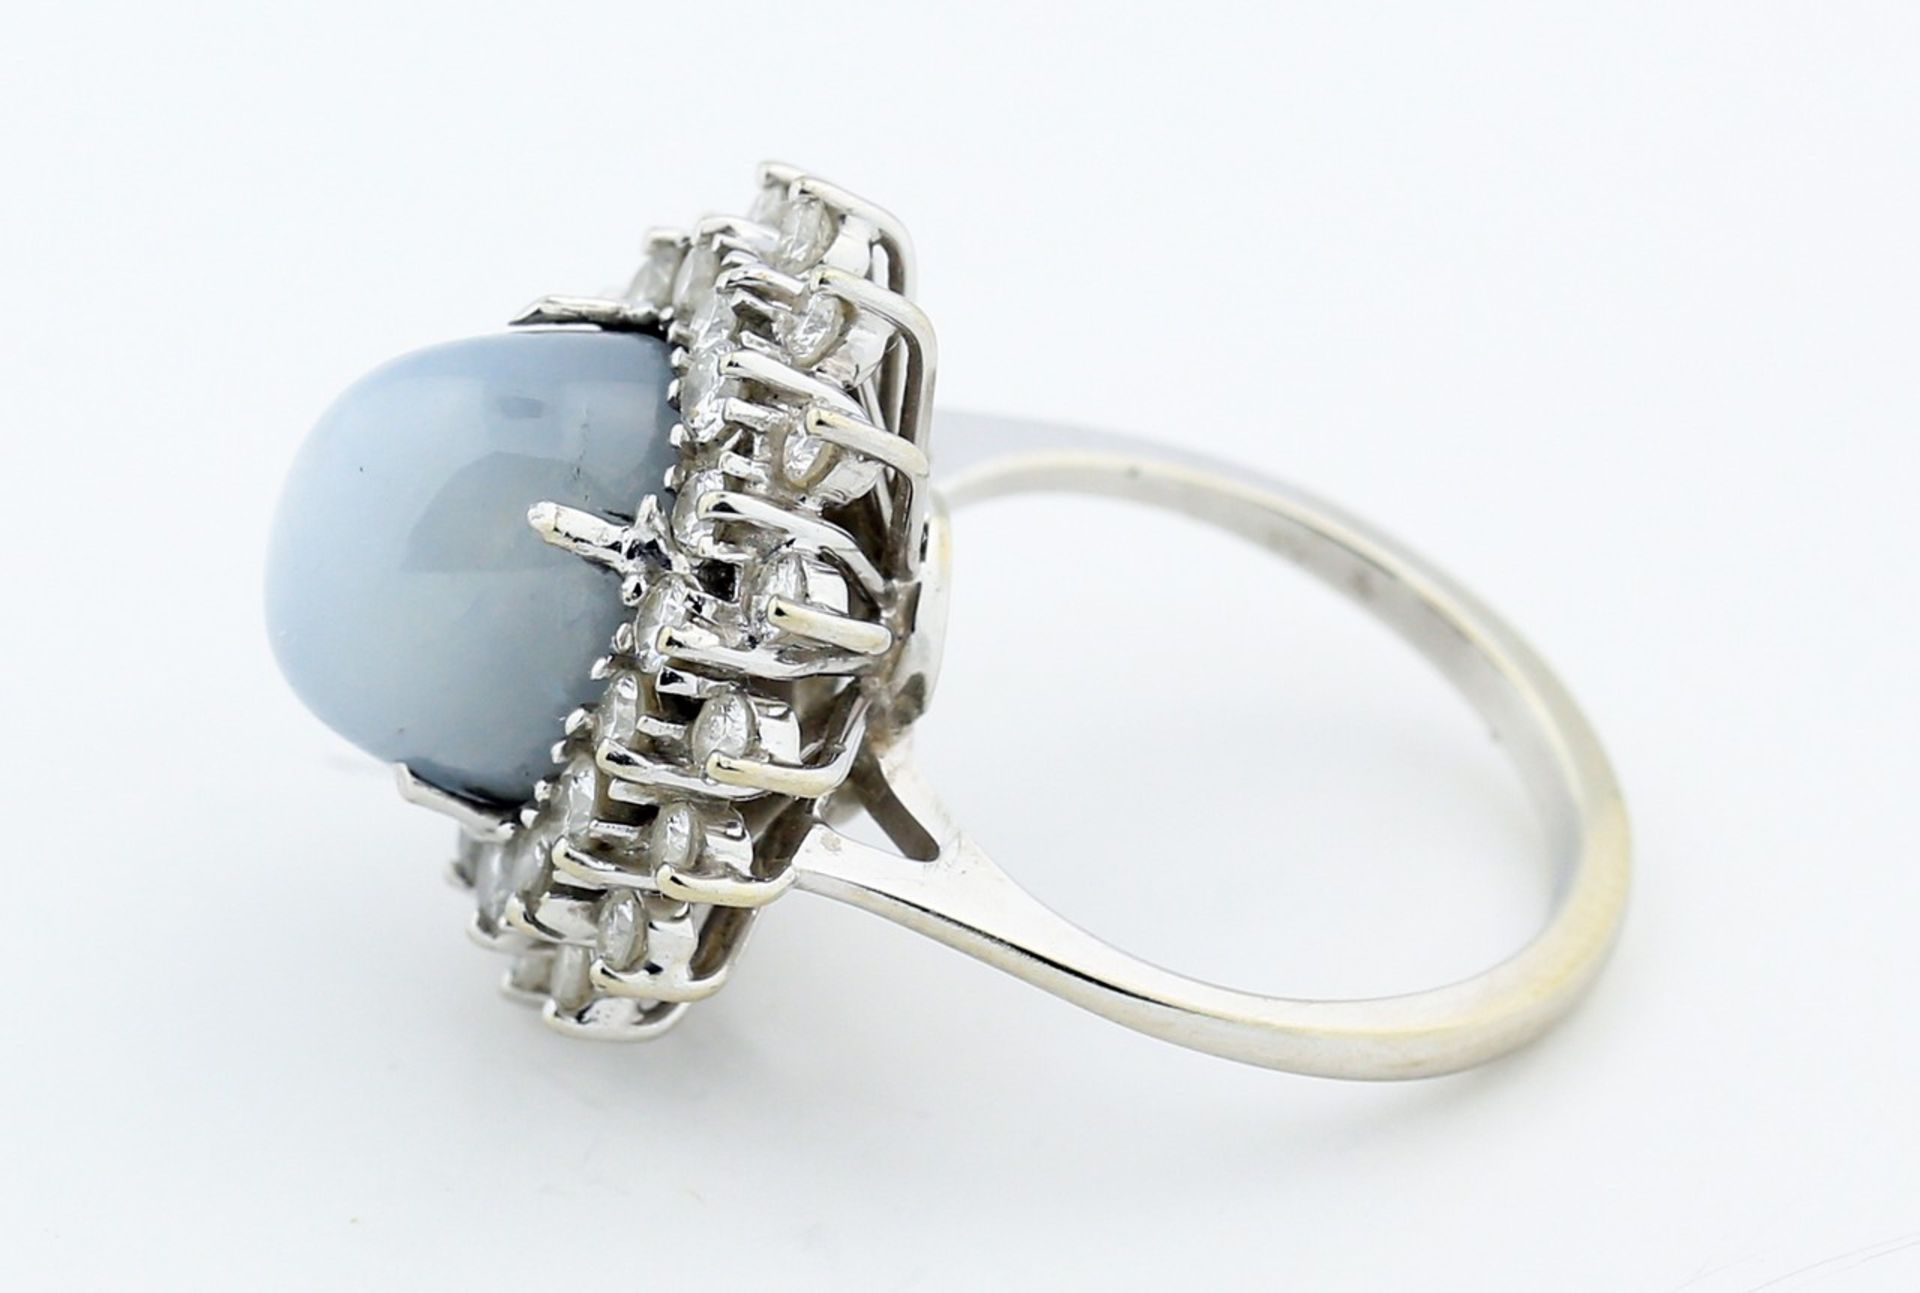 STAR SAPPHIRE AND DIAMOND RING Star Sapphire and Diamond Ring Centering on a star sapphire - Image 3 of 4